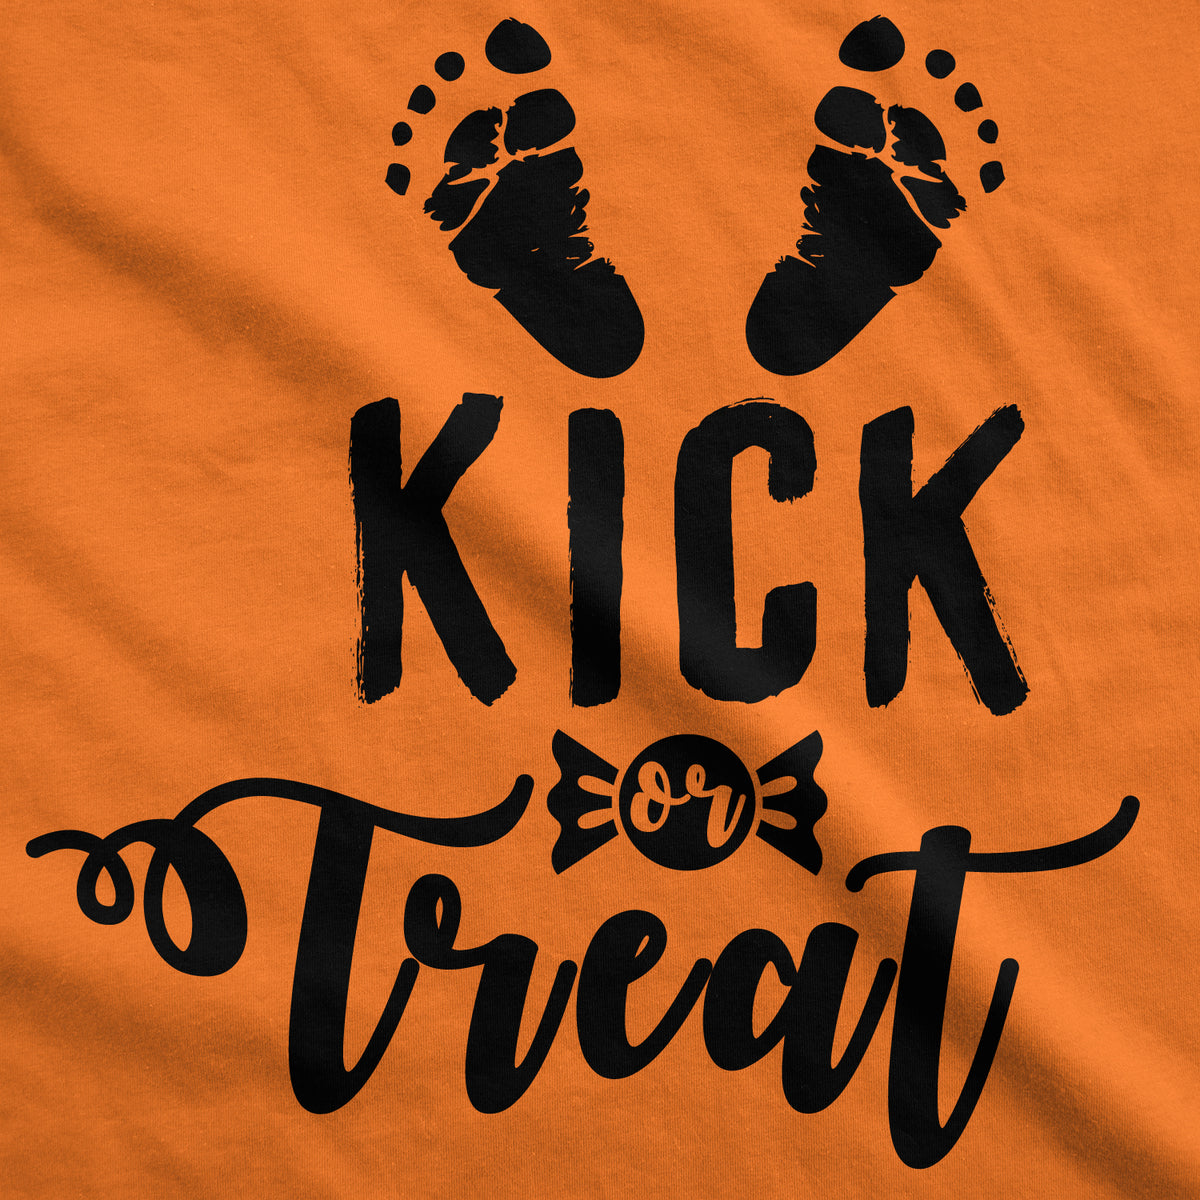 Kick or Treat Maternity T Shirt